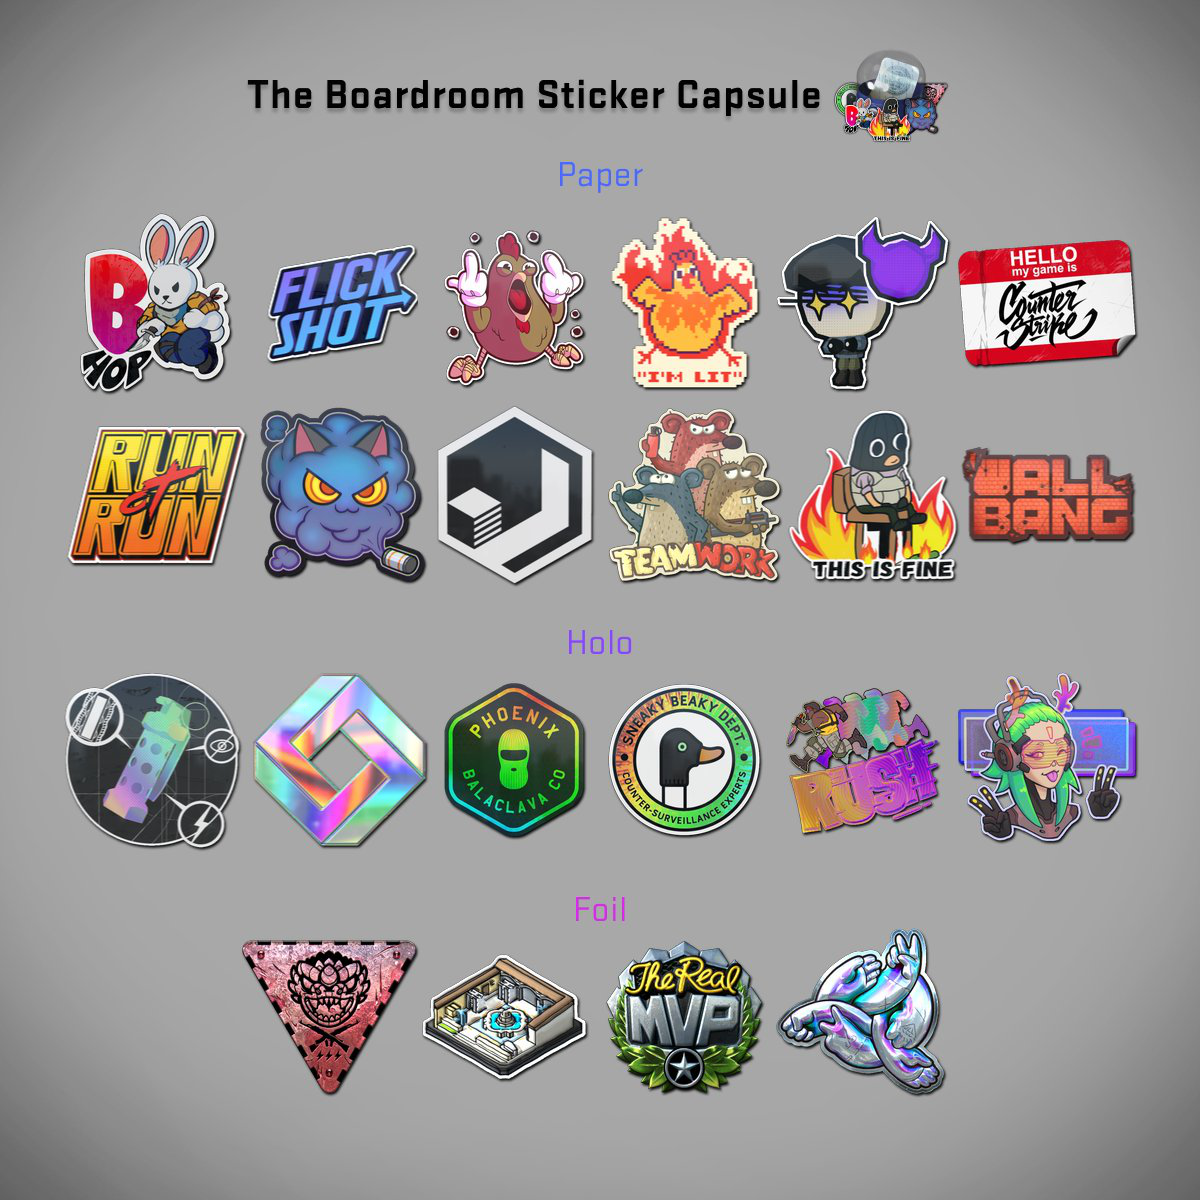 CS:GO Update Adds The Boardroom Stickers